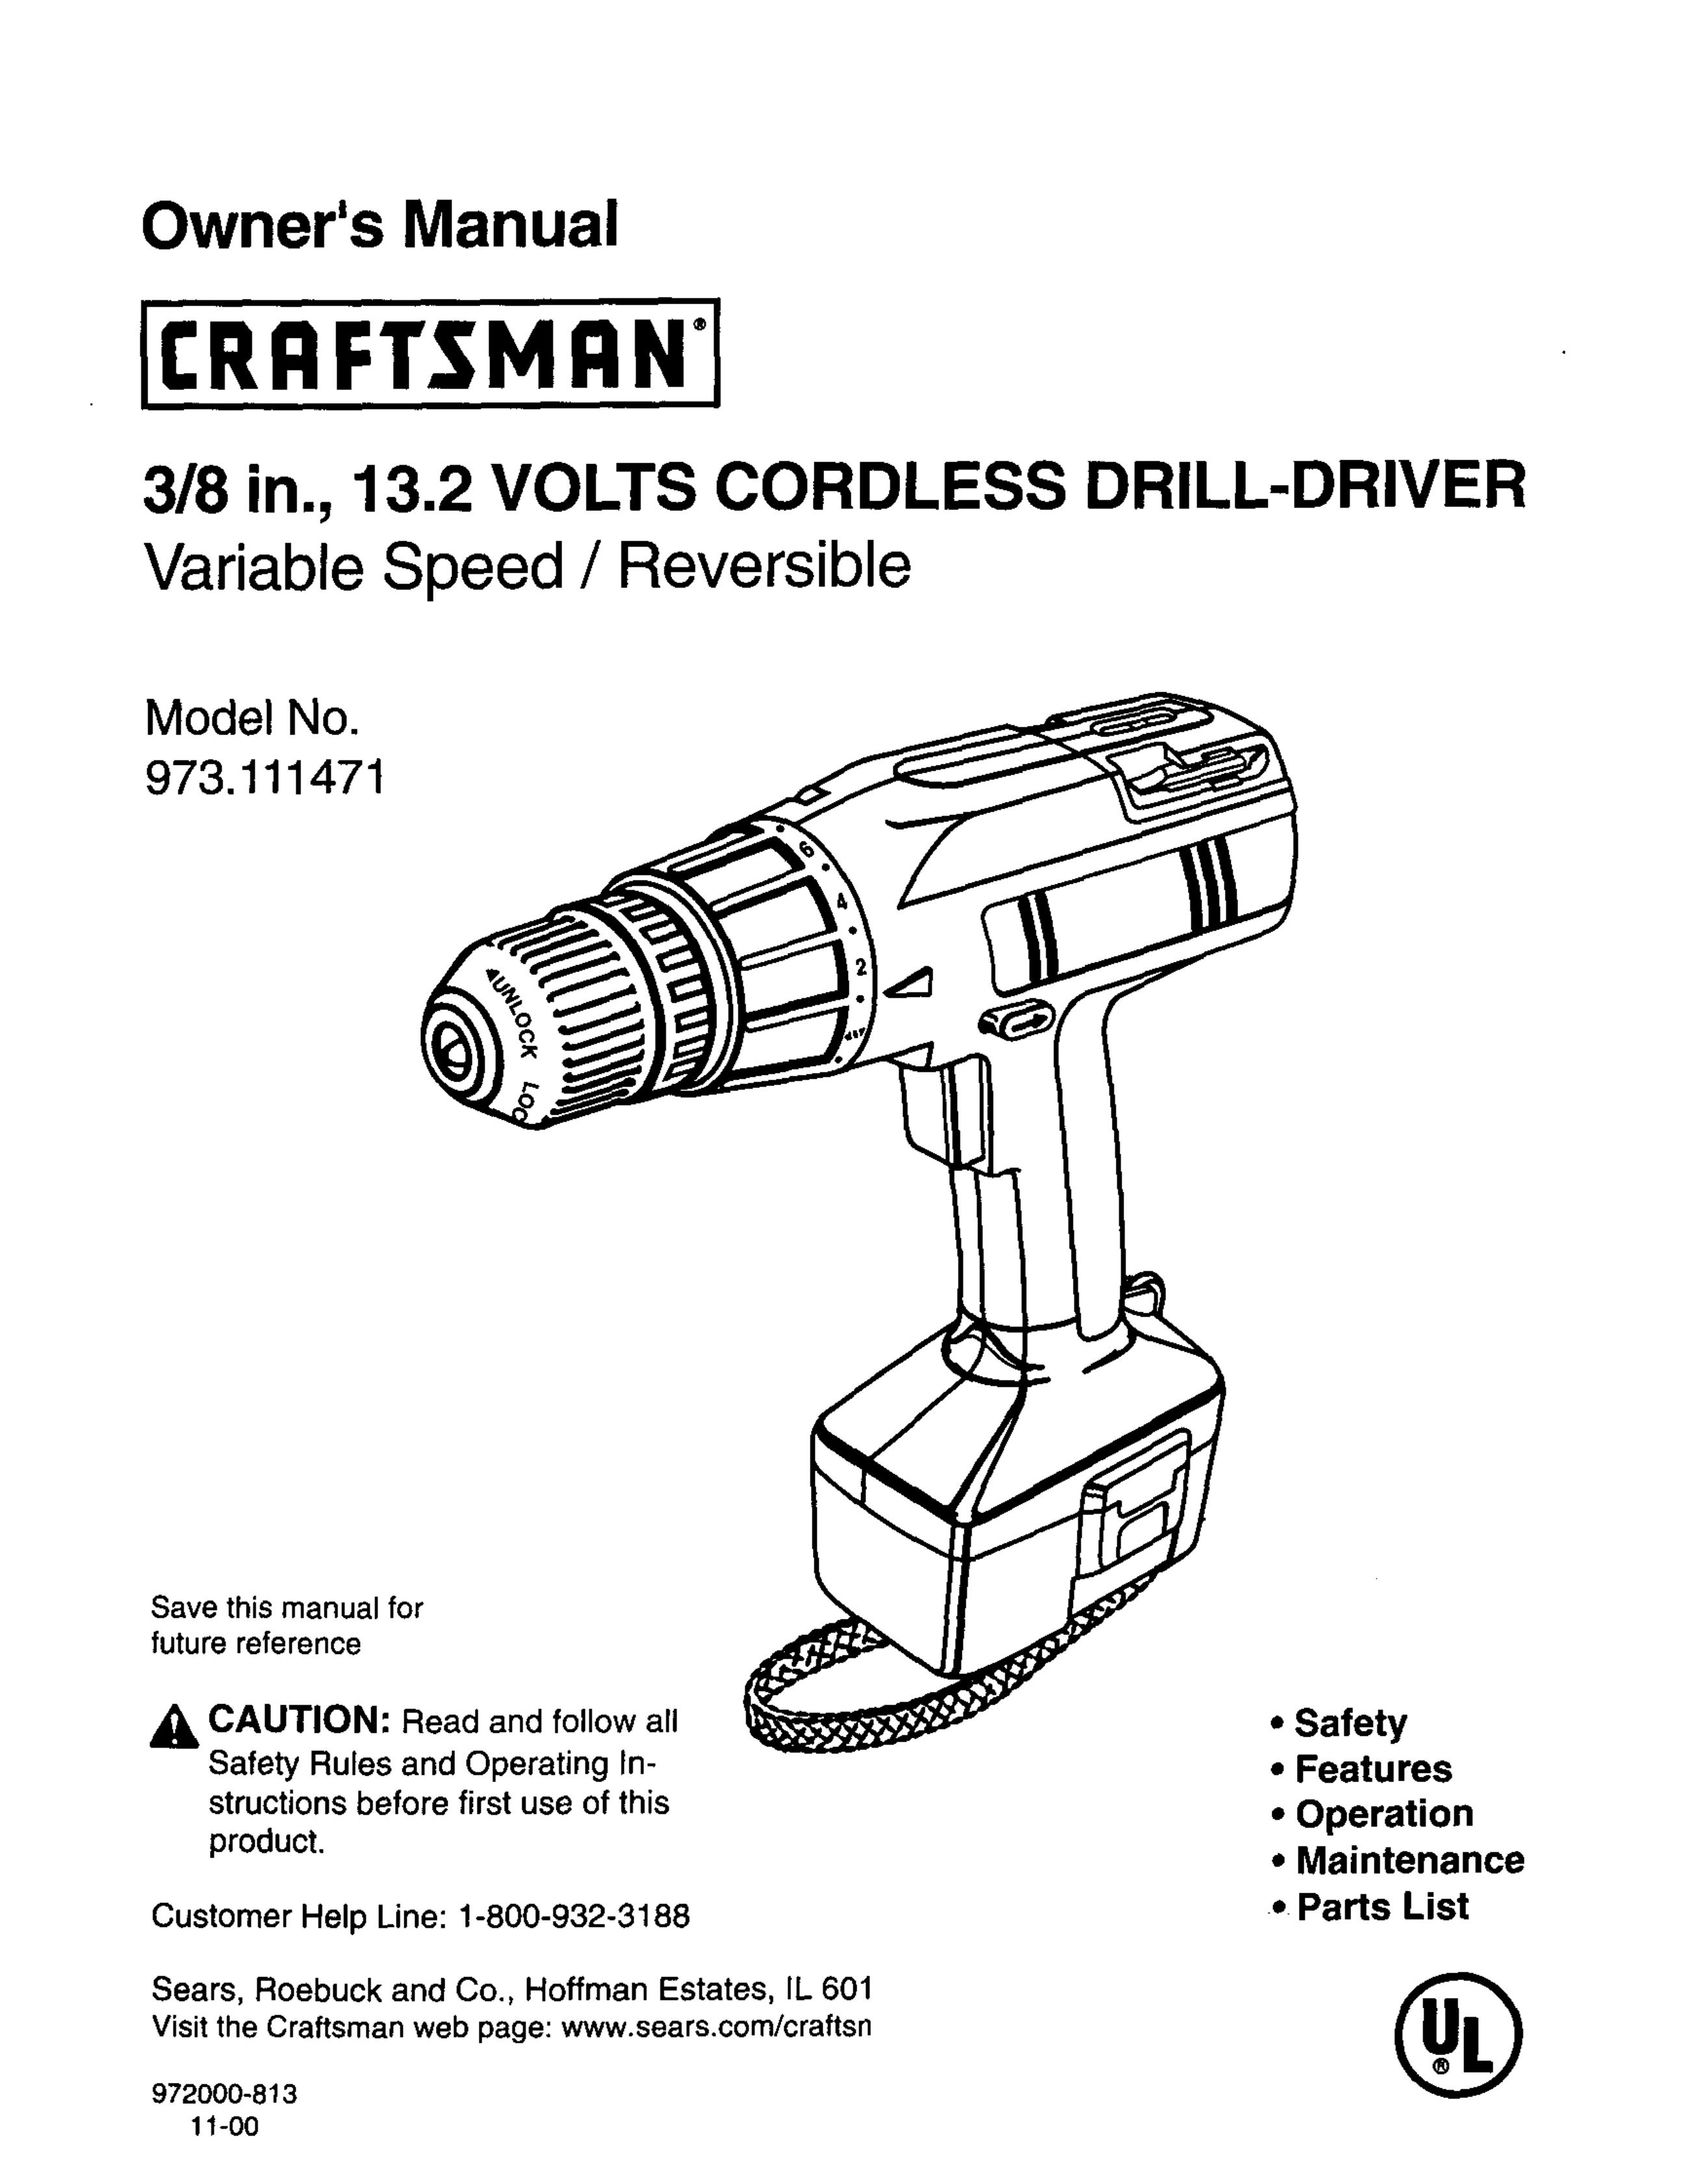 Craftsman 973.111471 Cordless Drill User Manual